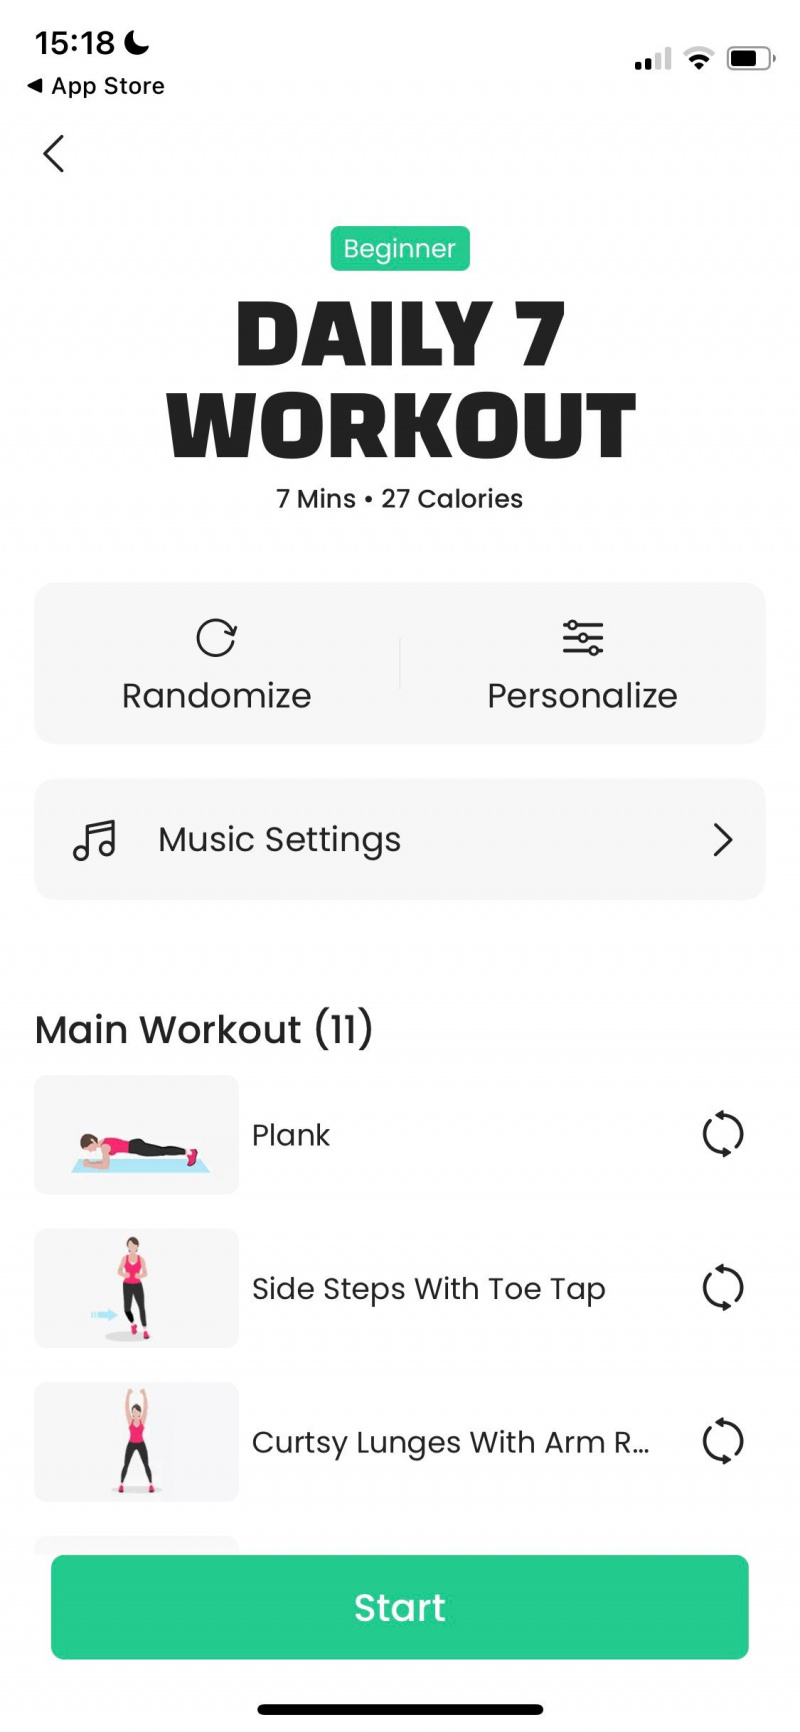   Petikan skrin apl 7M Workout yang menunjukkan program senaman harian